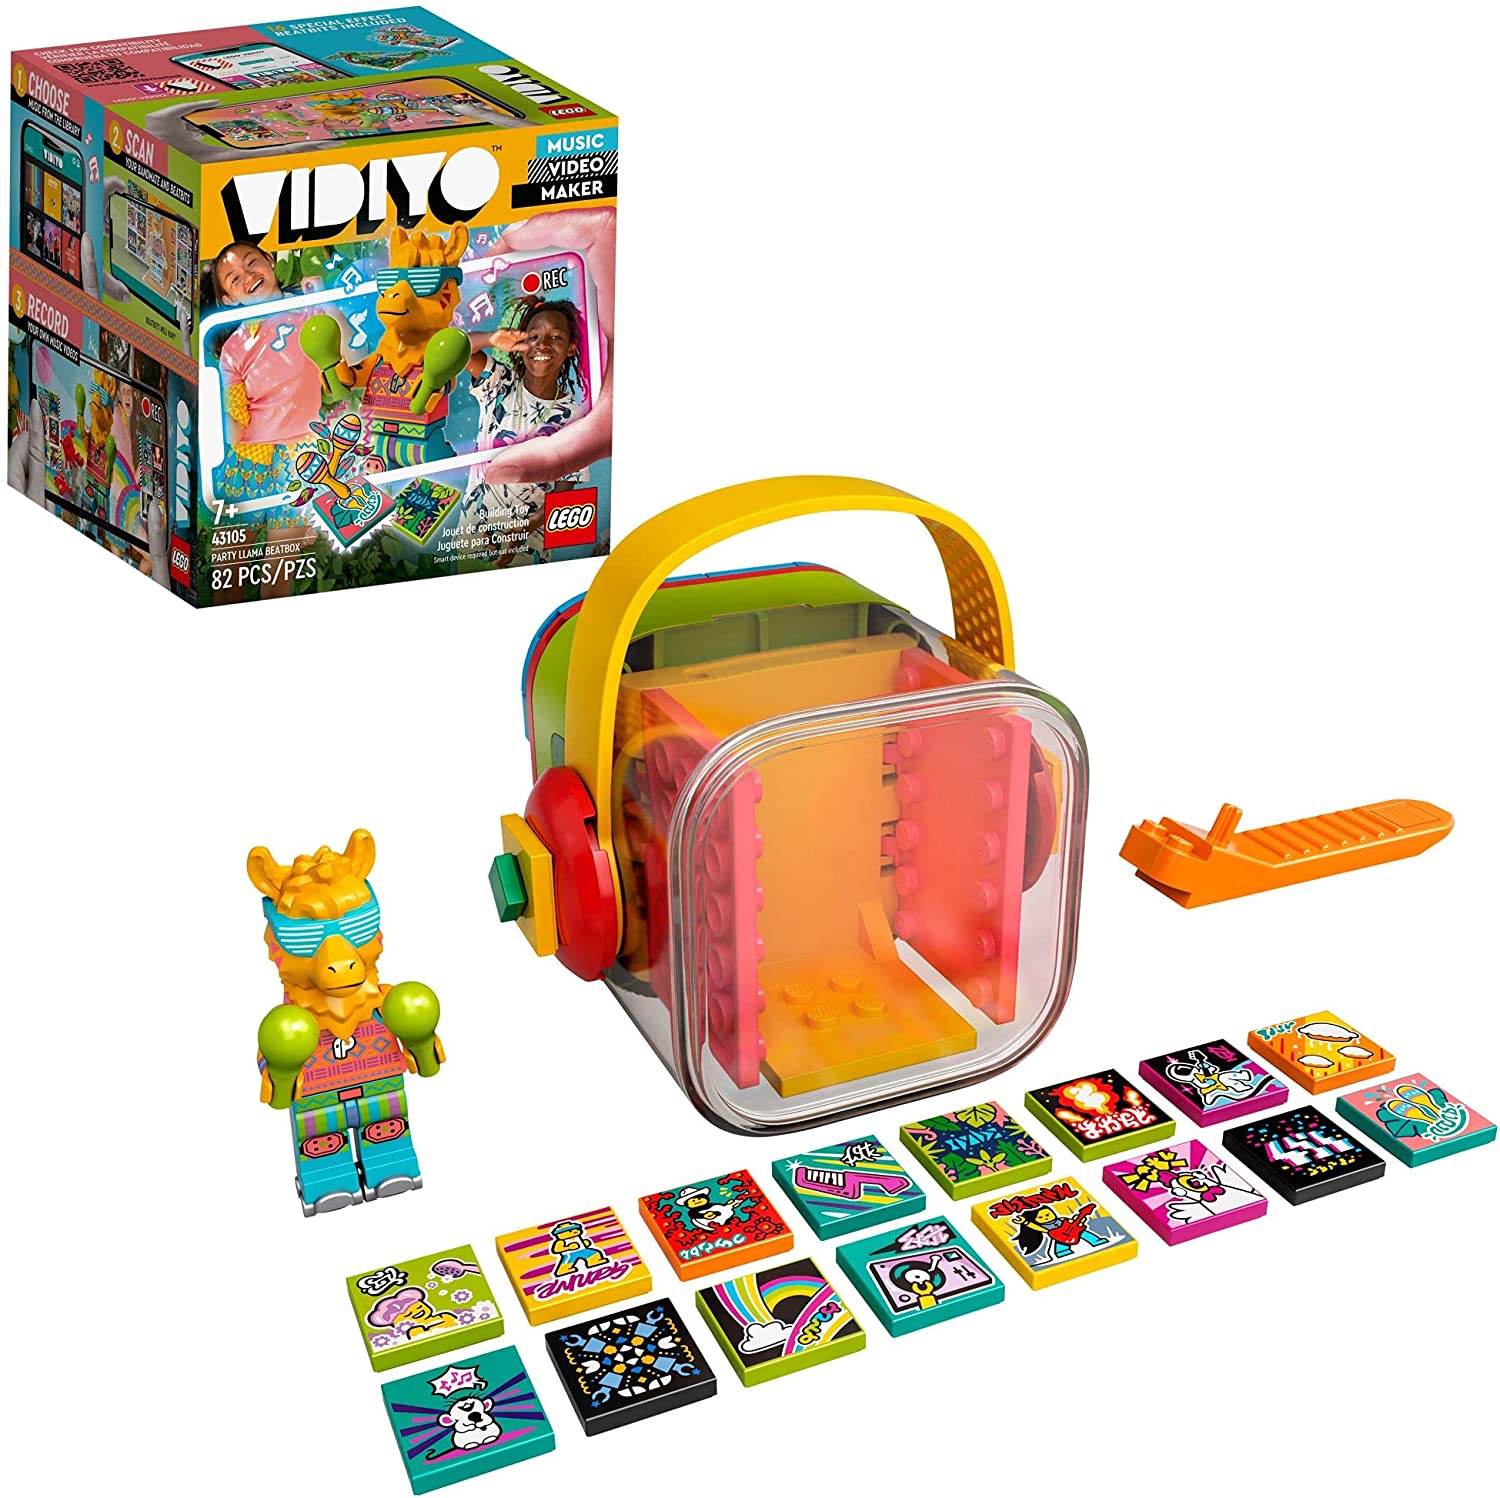 82-Piece LEGO Vidiyo Party Llama Beatbox Building Kit w/ Minifigure $7.20 + Free Shipping w/ Prime or on $25+